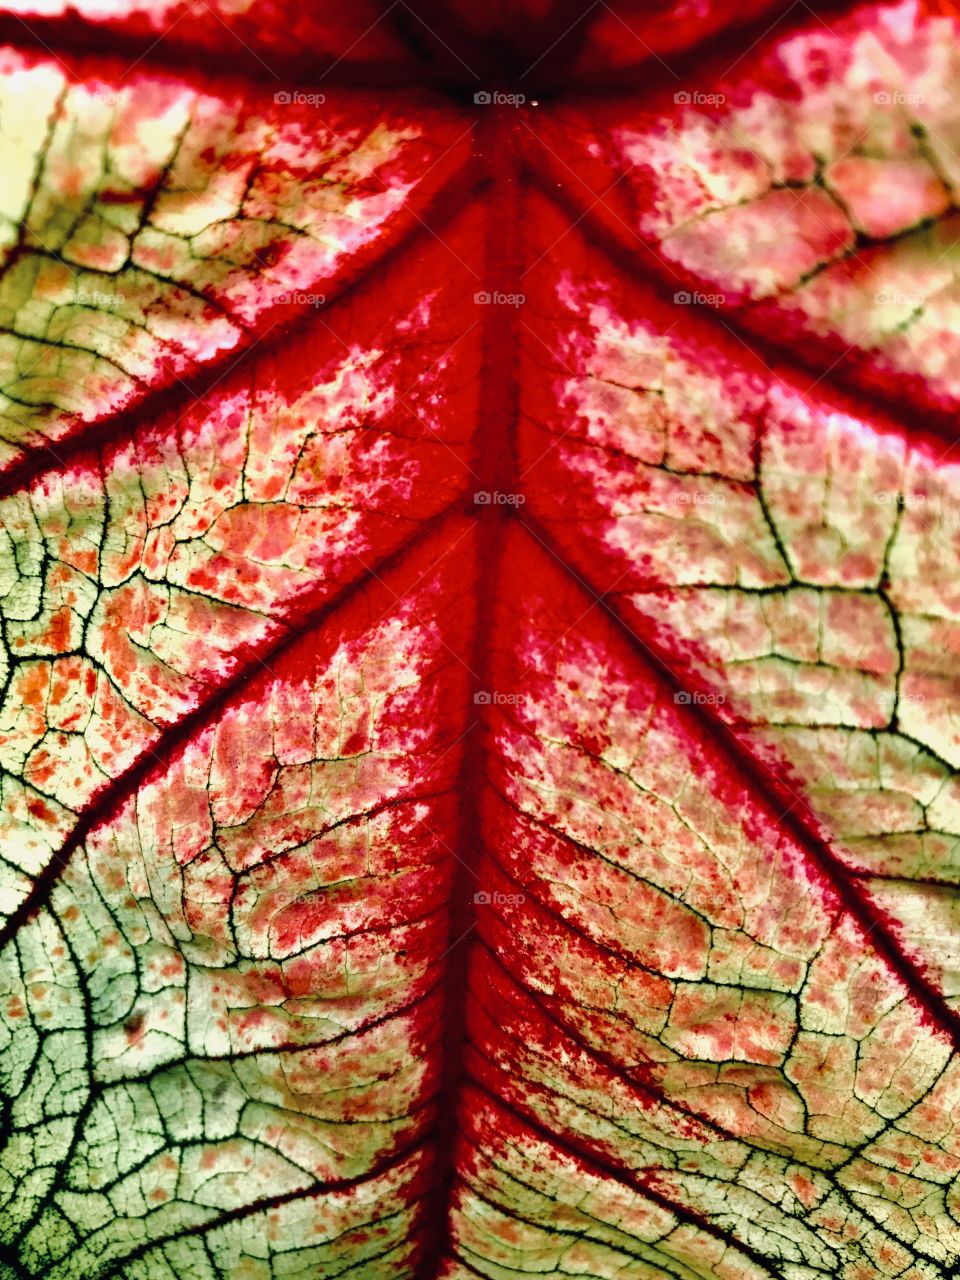 Veins in a leaf